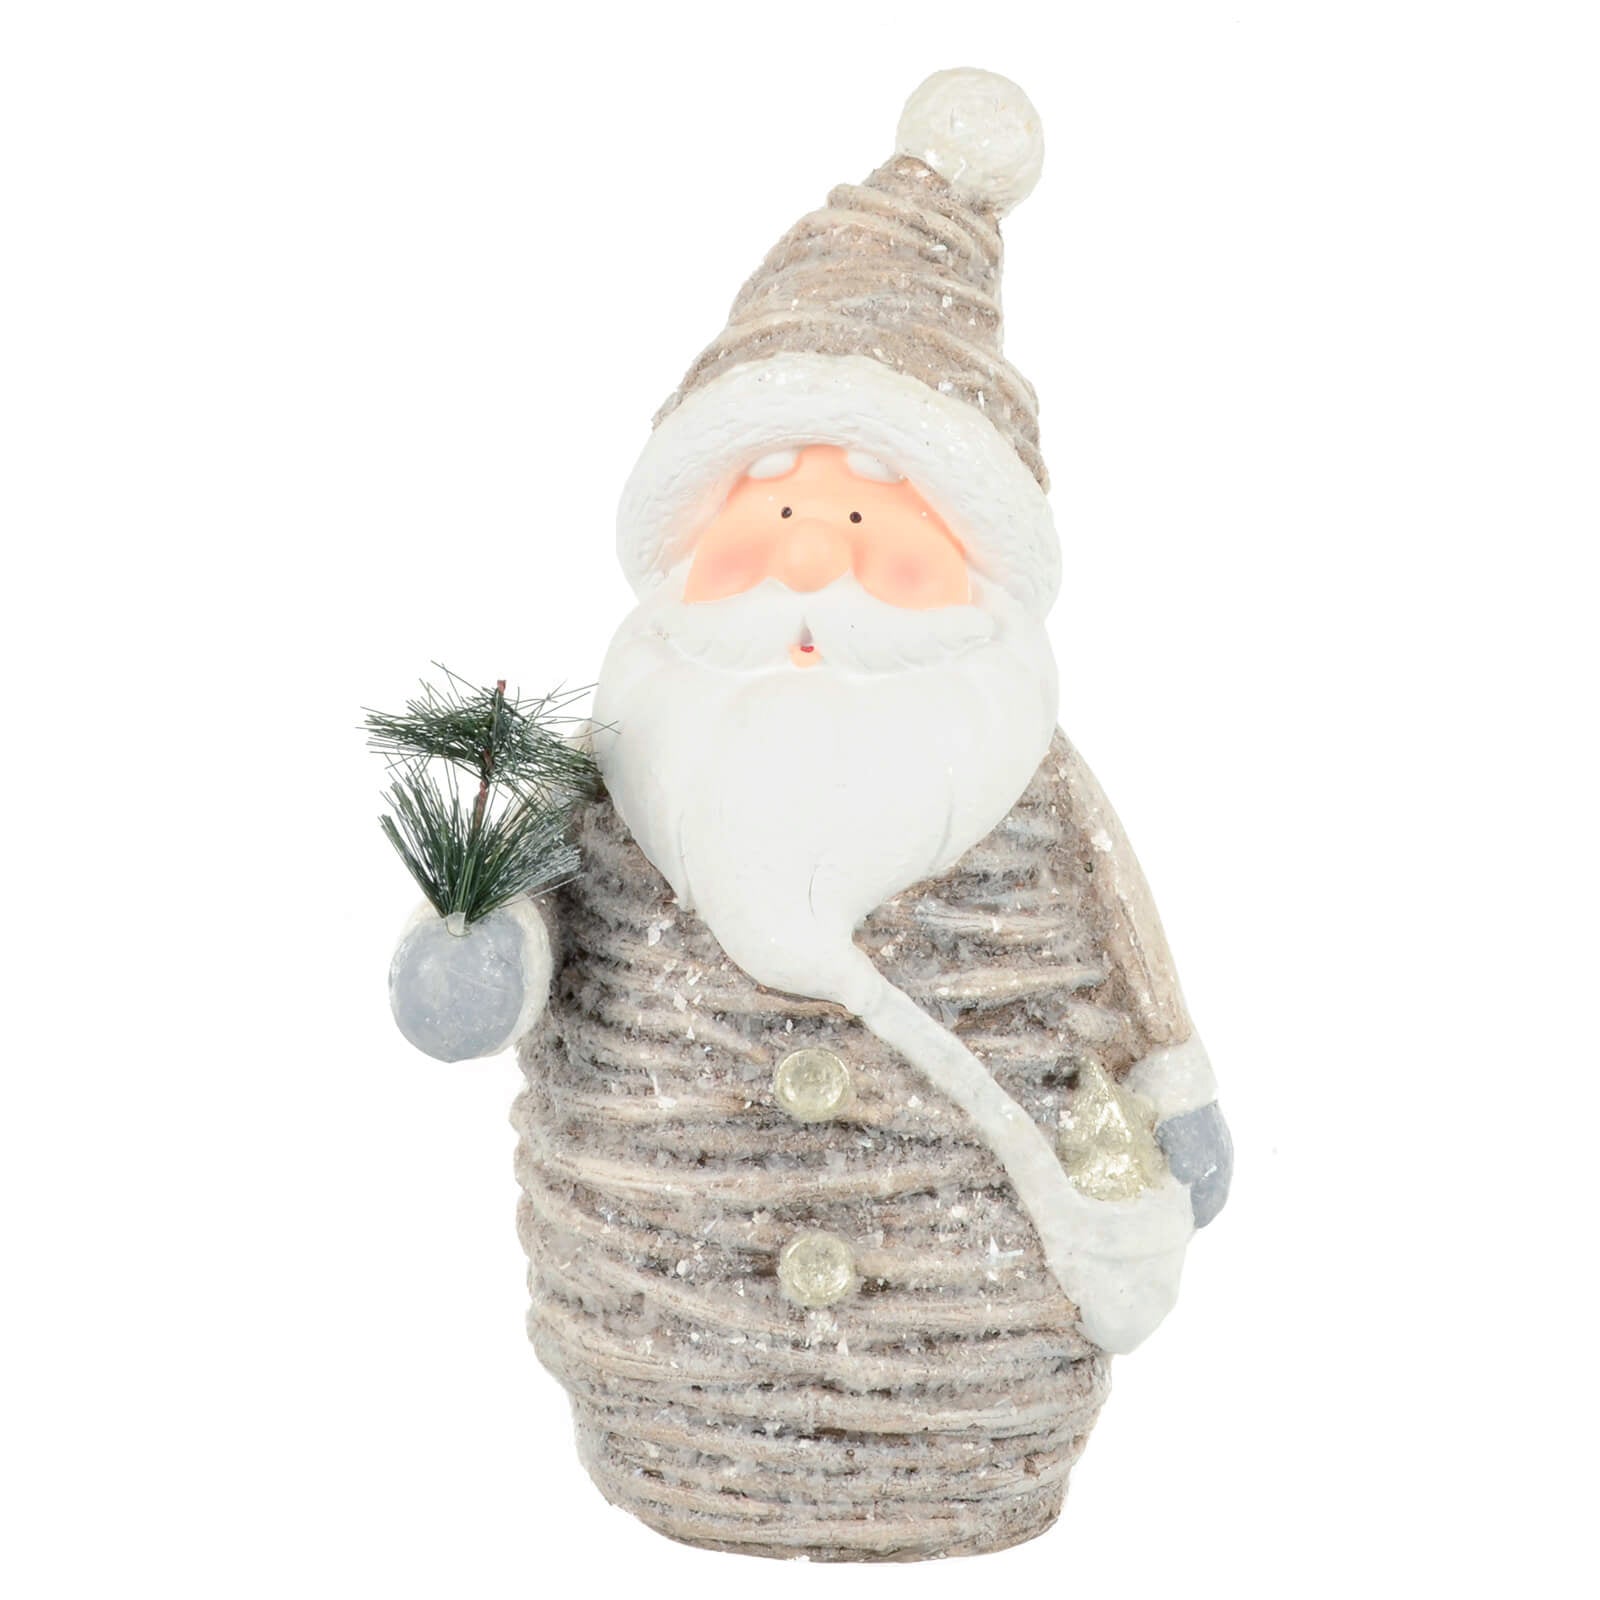 Mr Crimbo Christmas Figure Decoration Pine Branch Ceramic 45cm - MrCrimbo.co.uk -XS7146 - Santa -